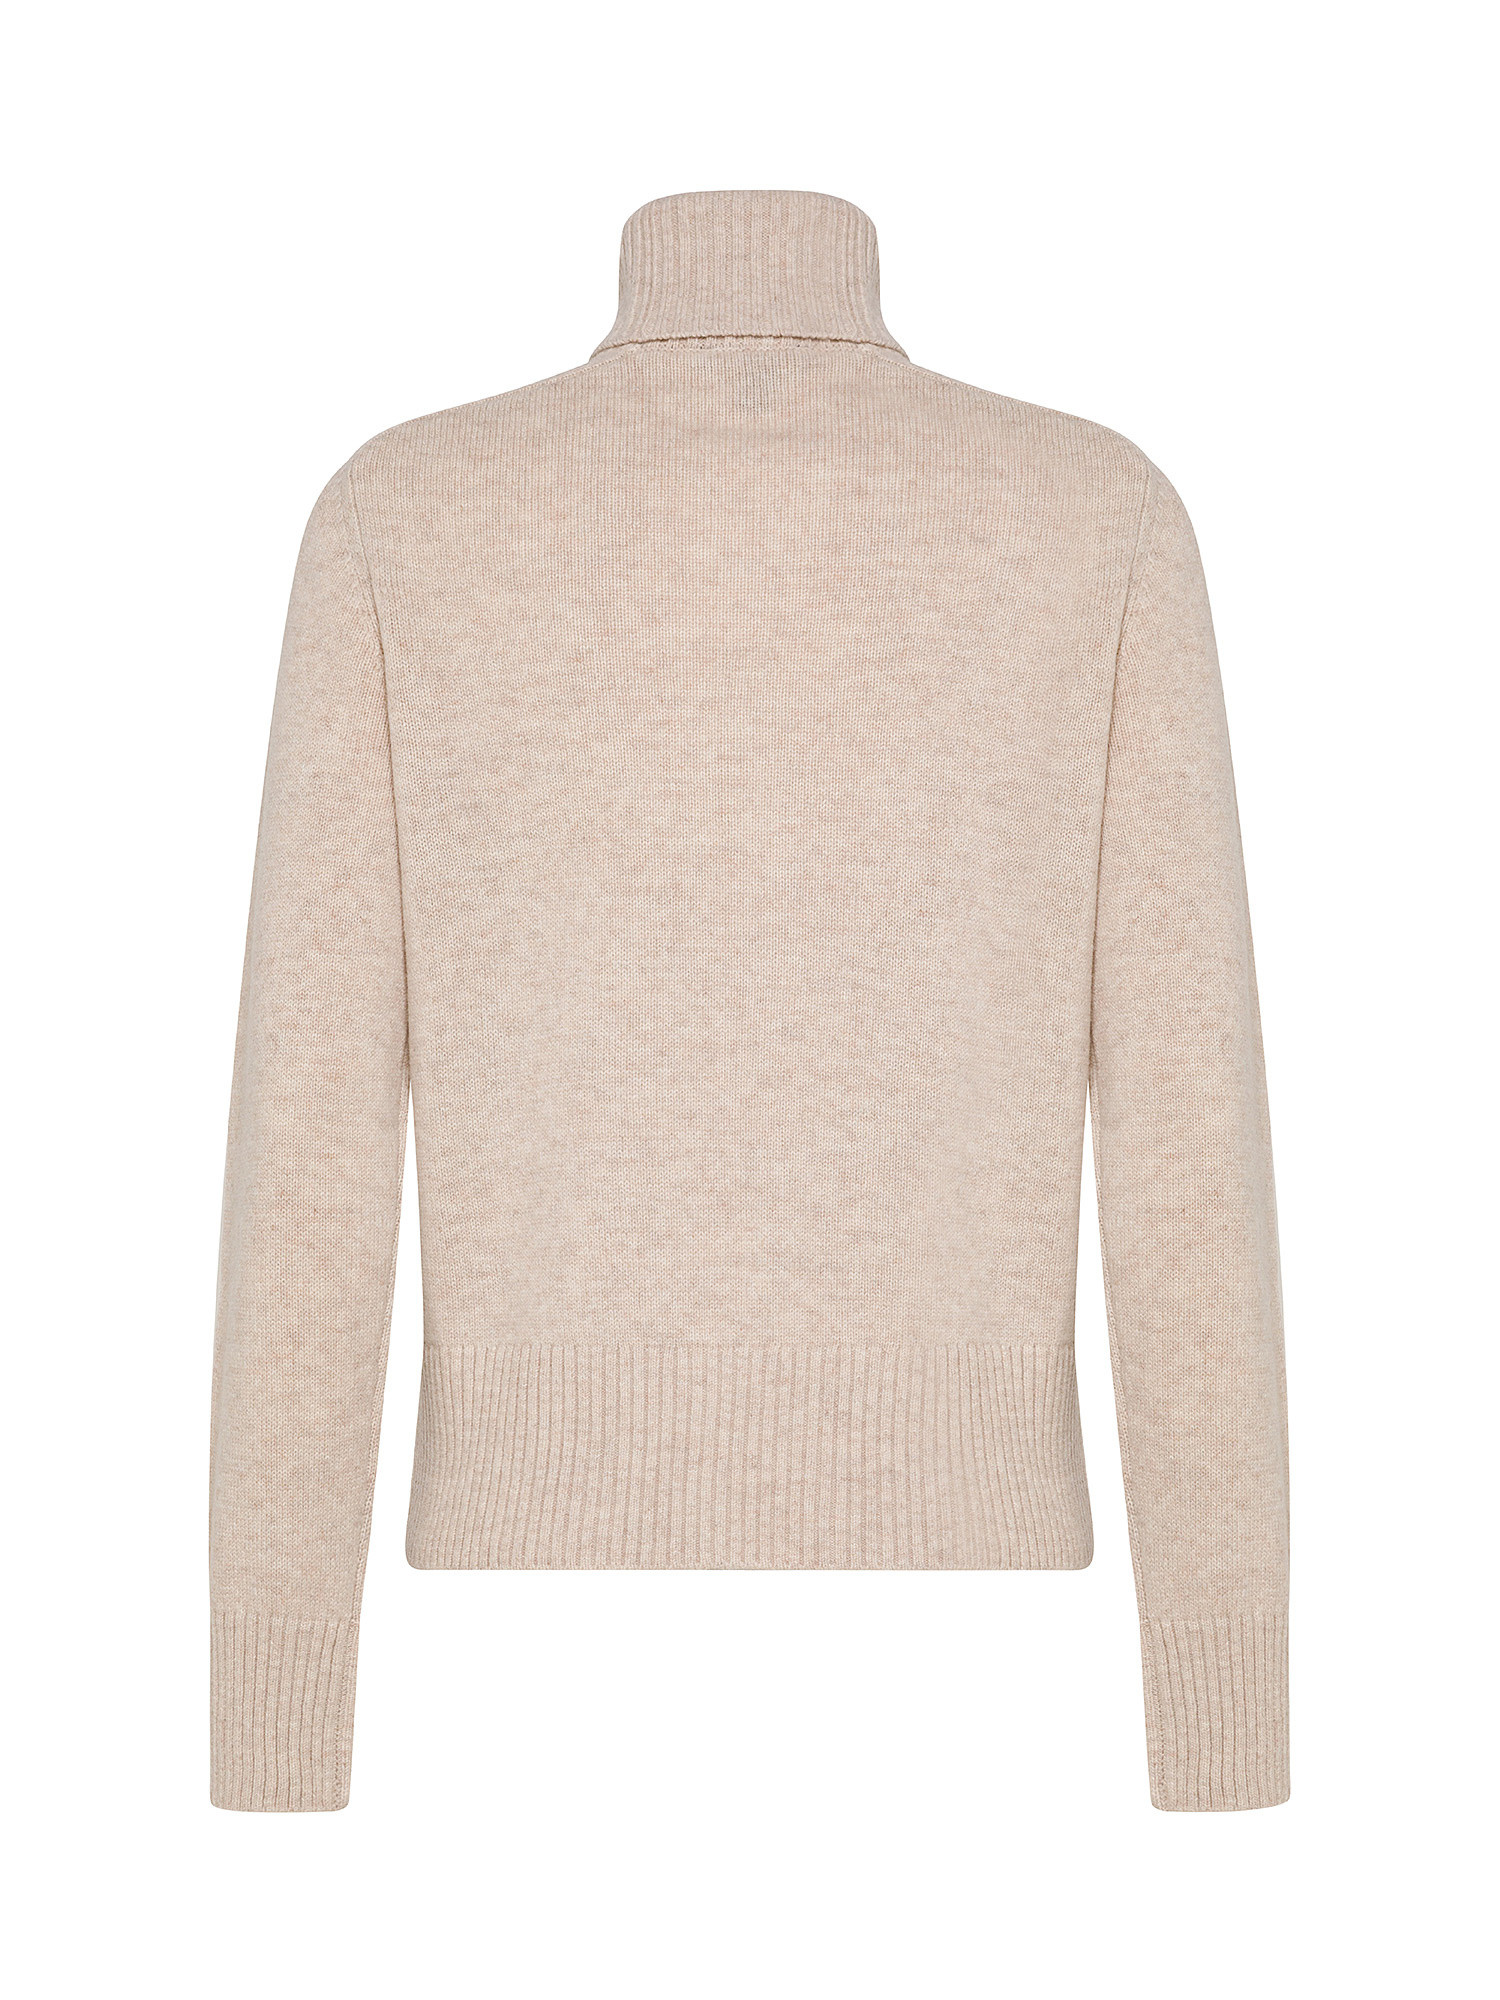 Ecoalf - Cisa turtleneck sweater, Light Beige, large image number 1